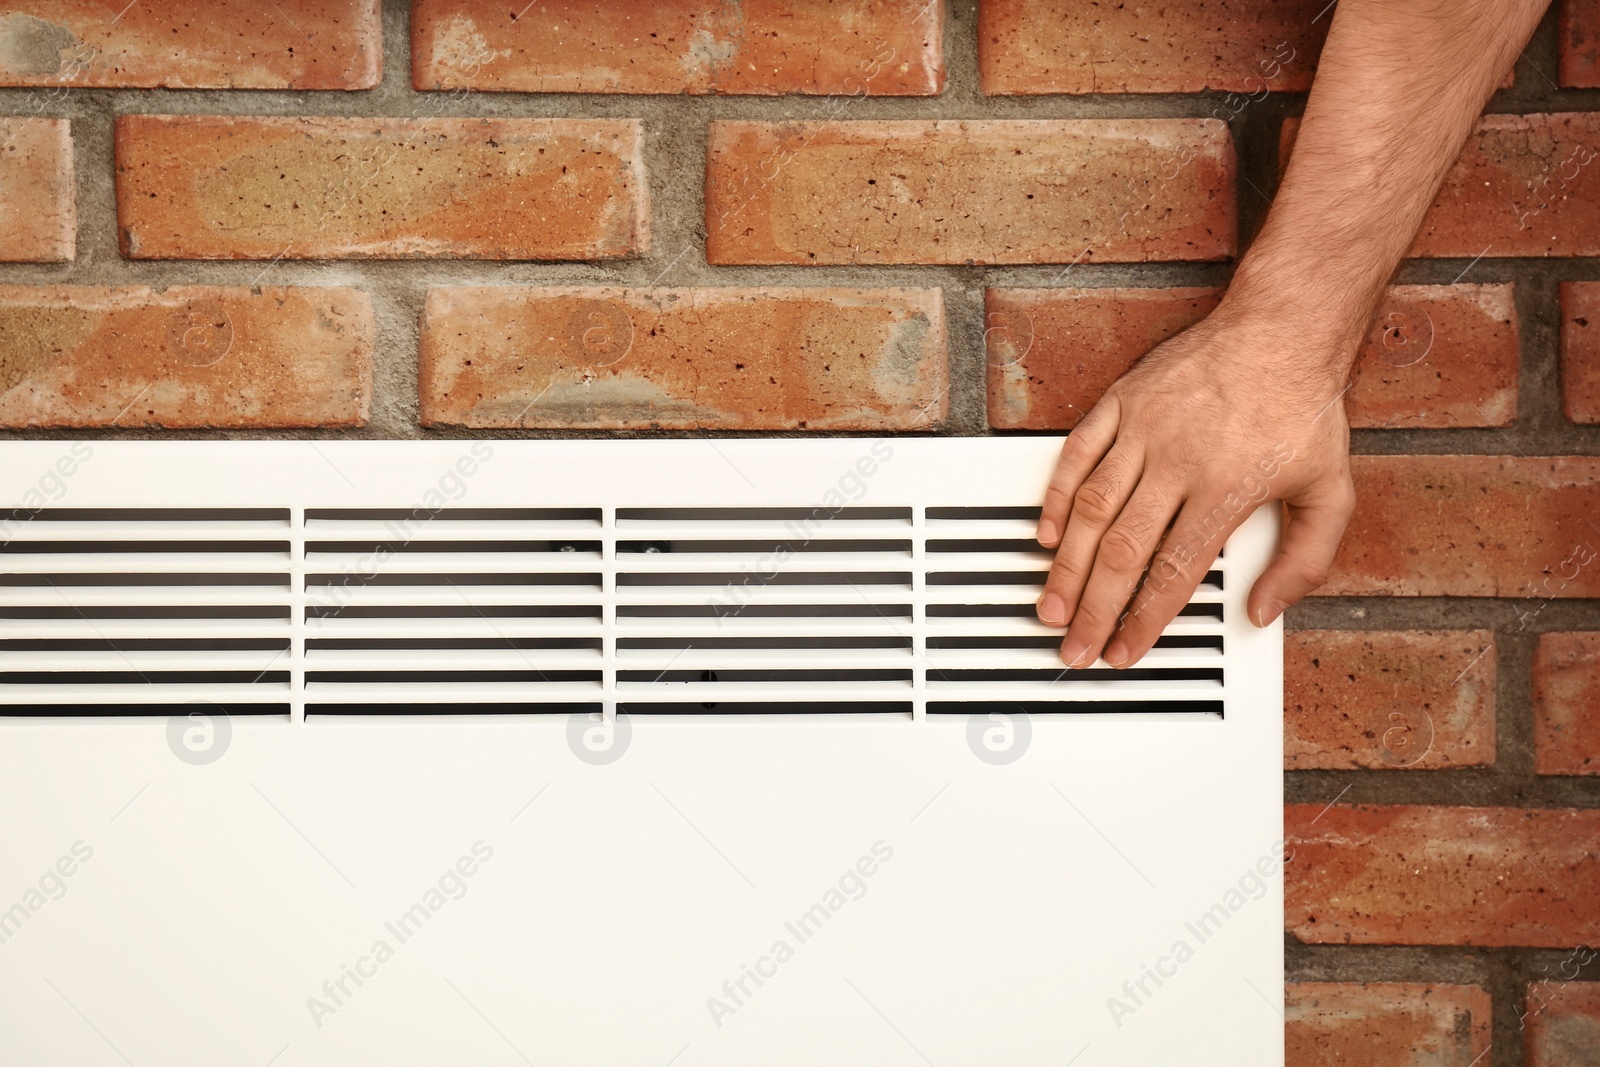 Photo of Man checking temperature of heating convector on brick, closeup